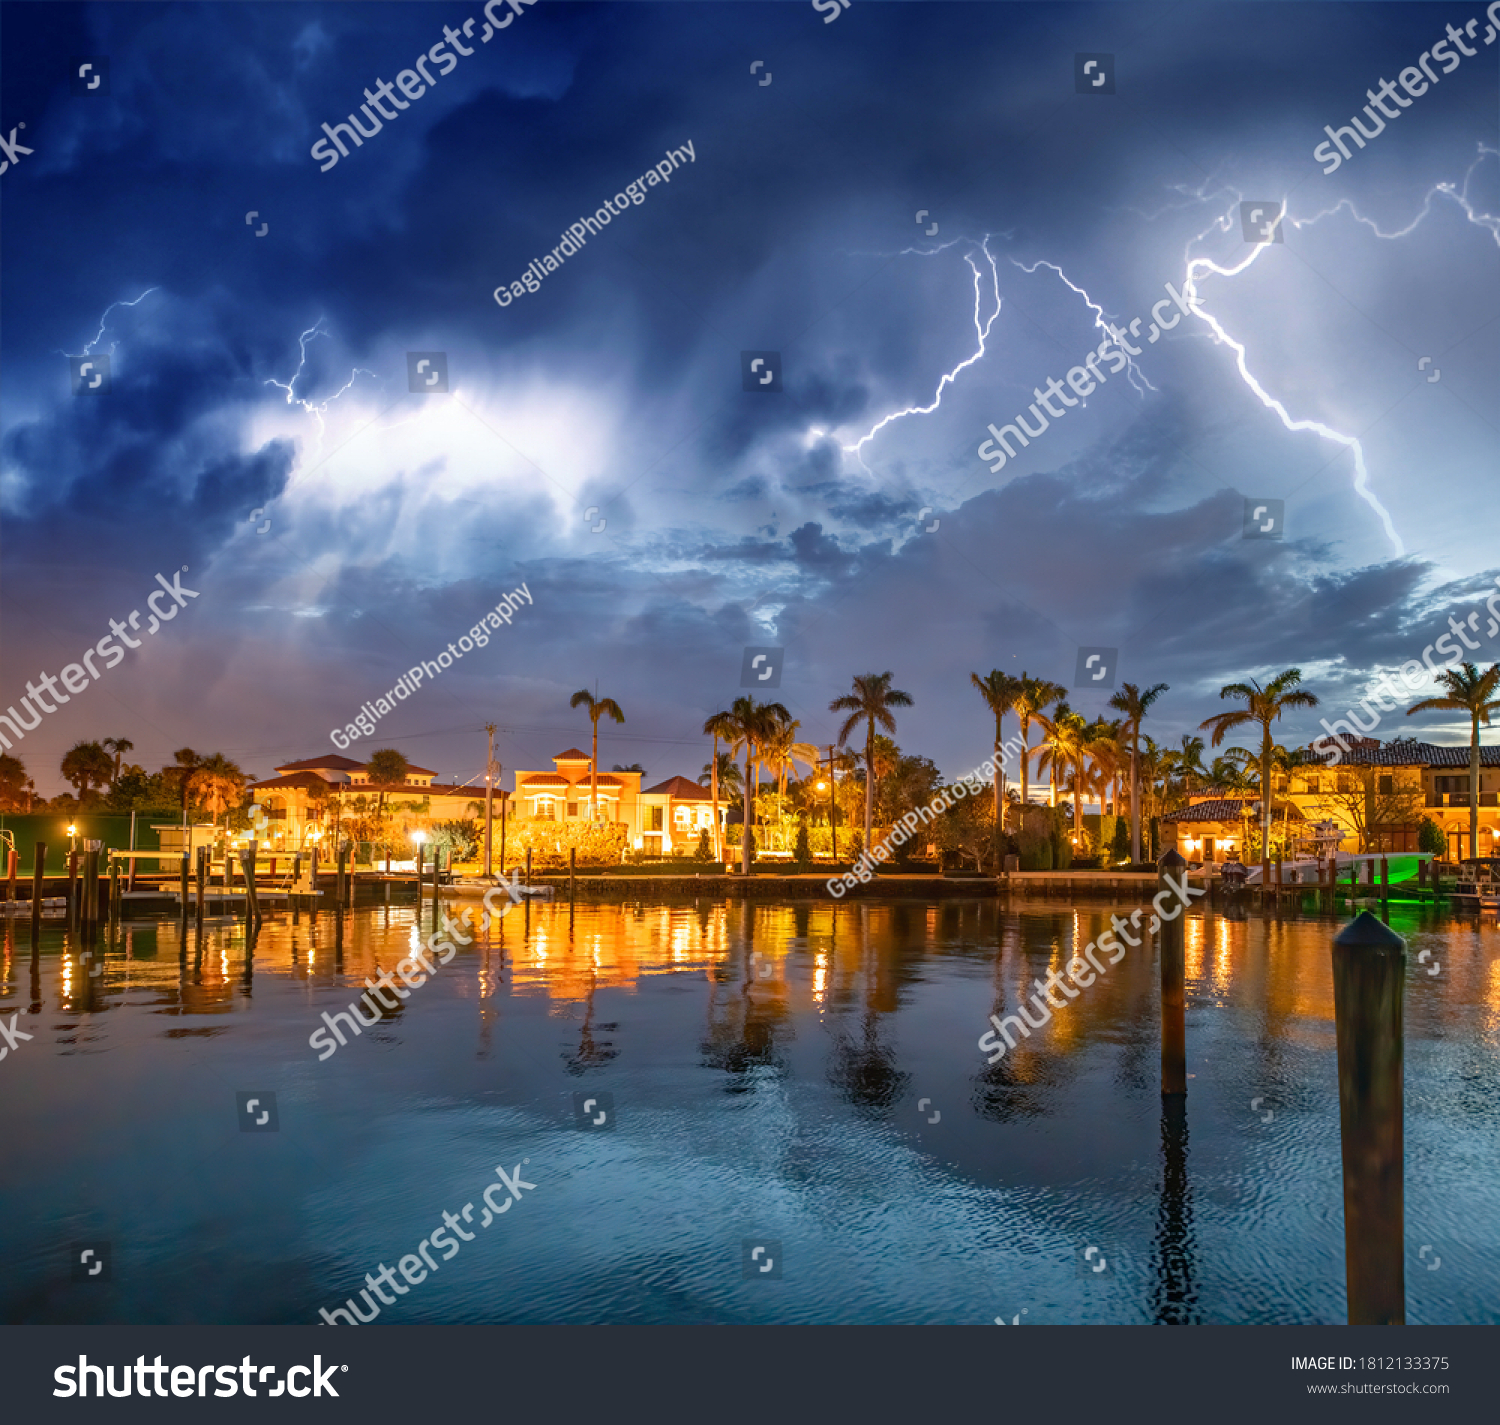 Boca Raton buildings along Lake Boca Raton during a storm, Florida. #1812133375